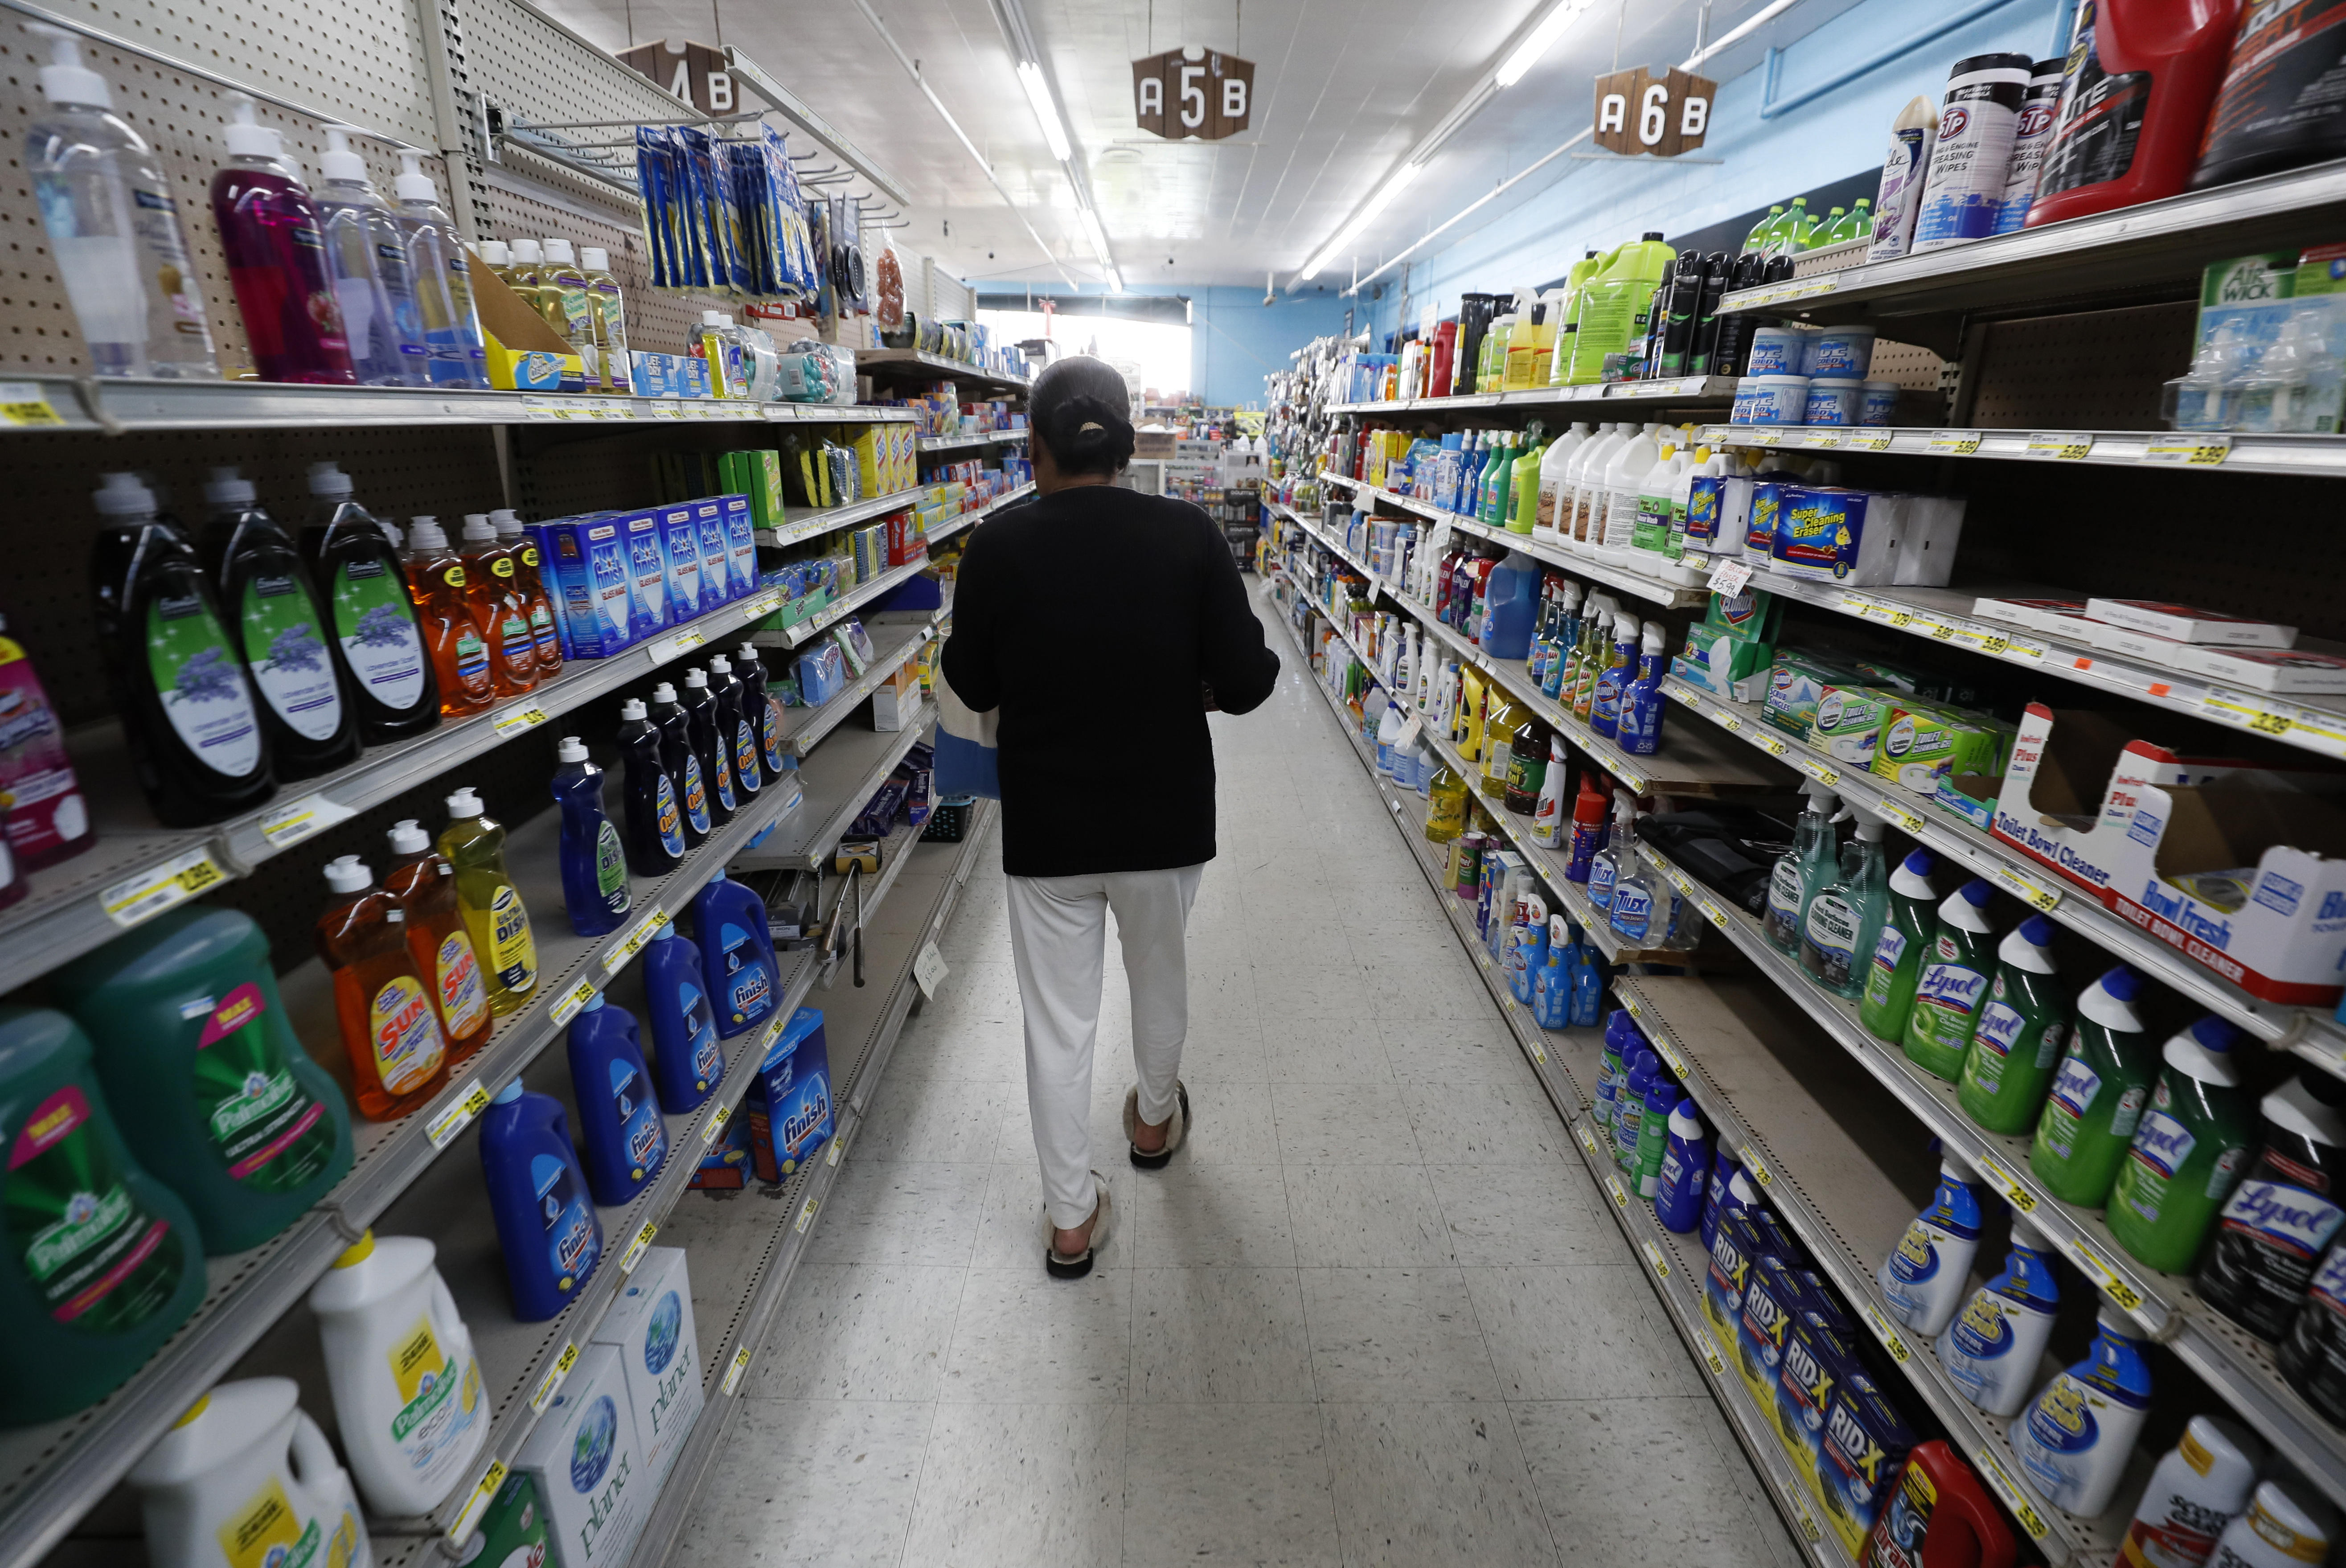 What's the big deal? Shoppers seek Cabazon discounts despite pandemic, News